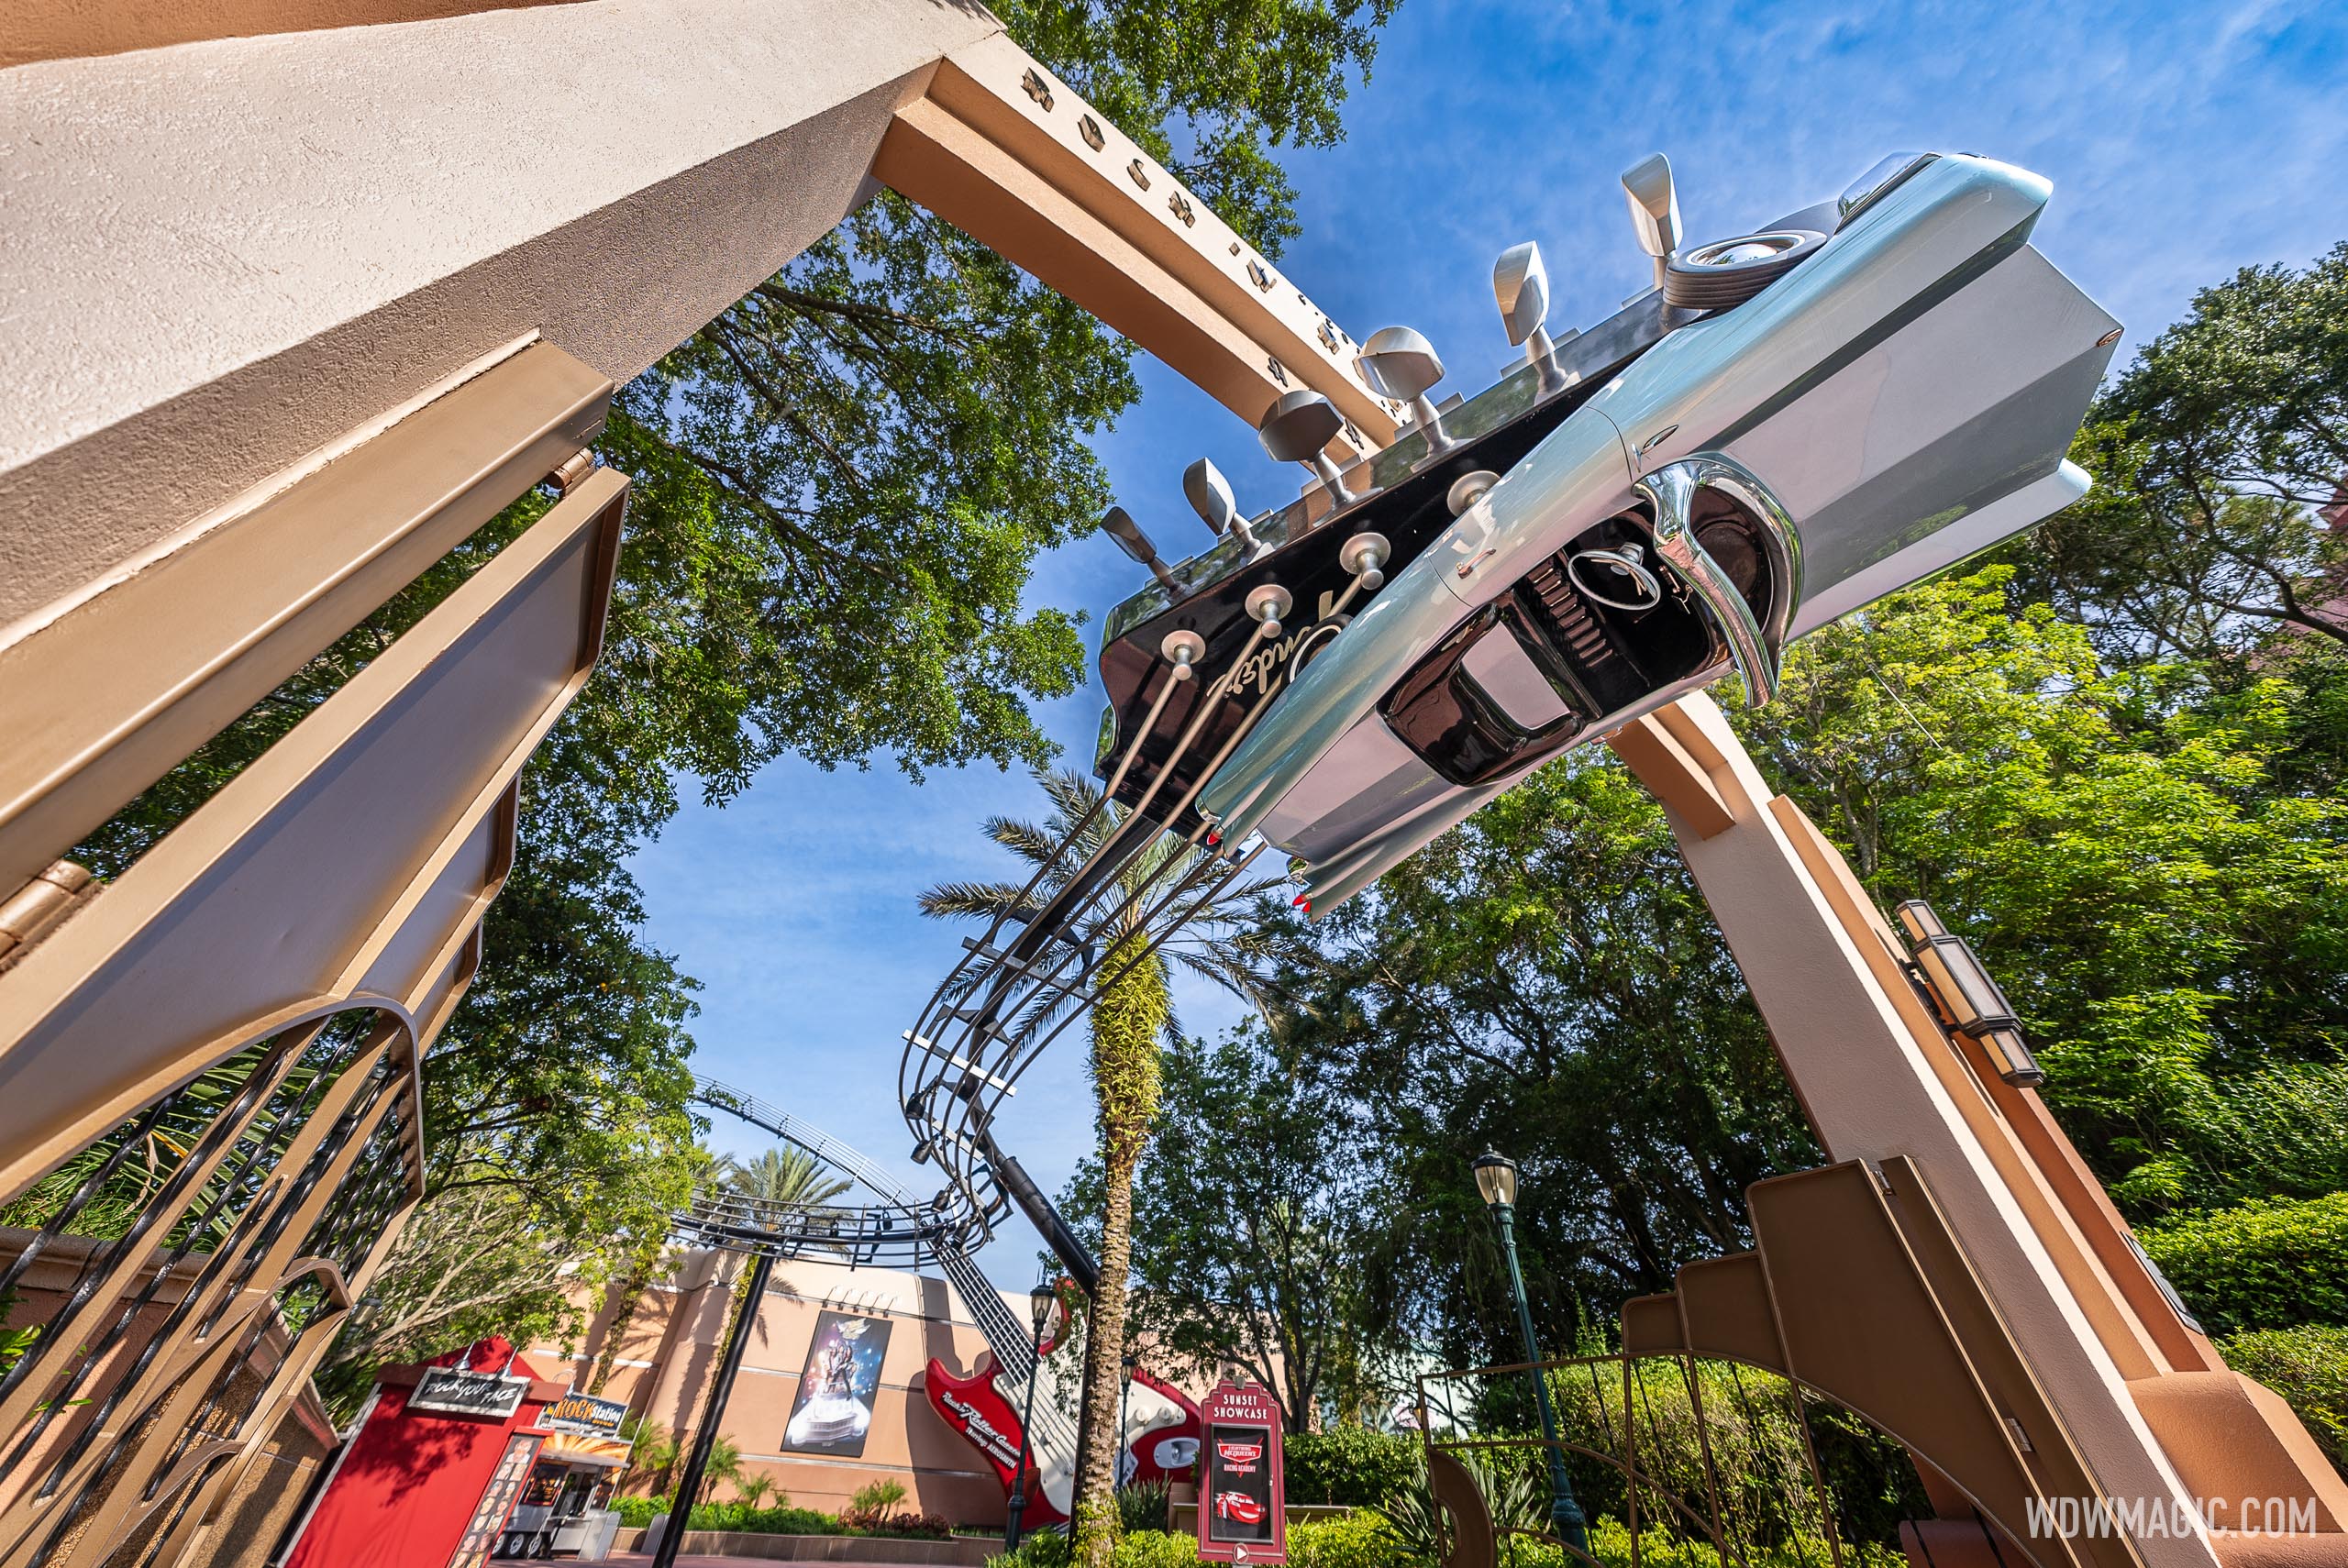 Walt Disney World's Rock 'n' Roller Coaster now closed for long